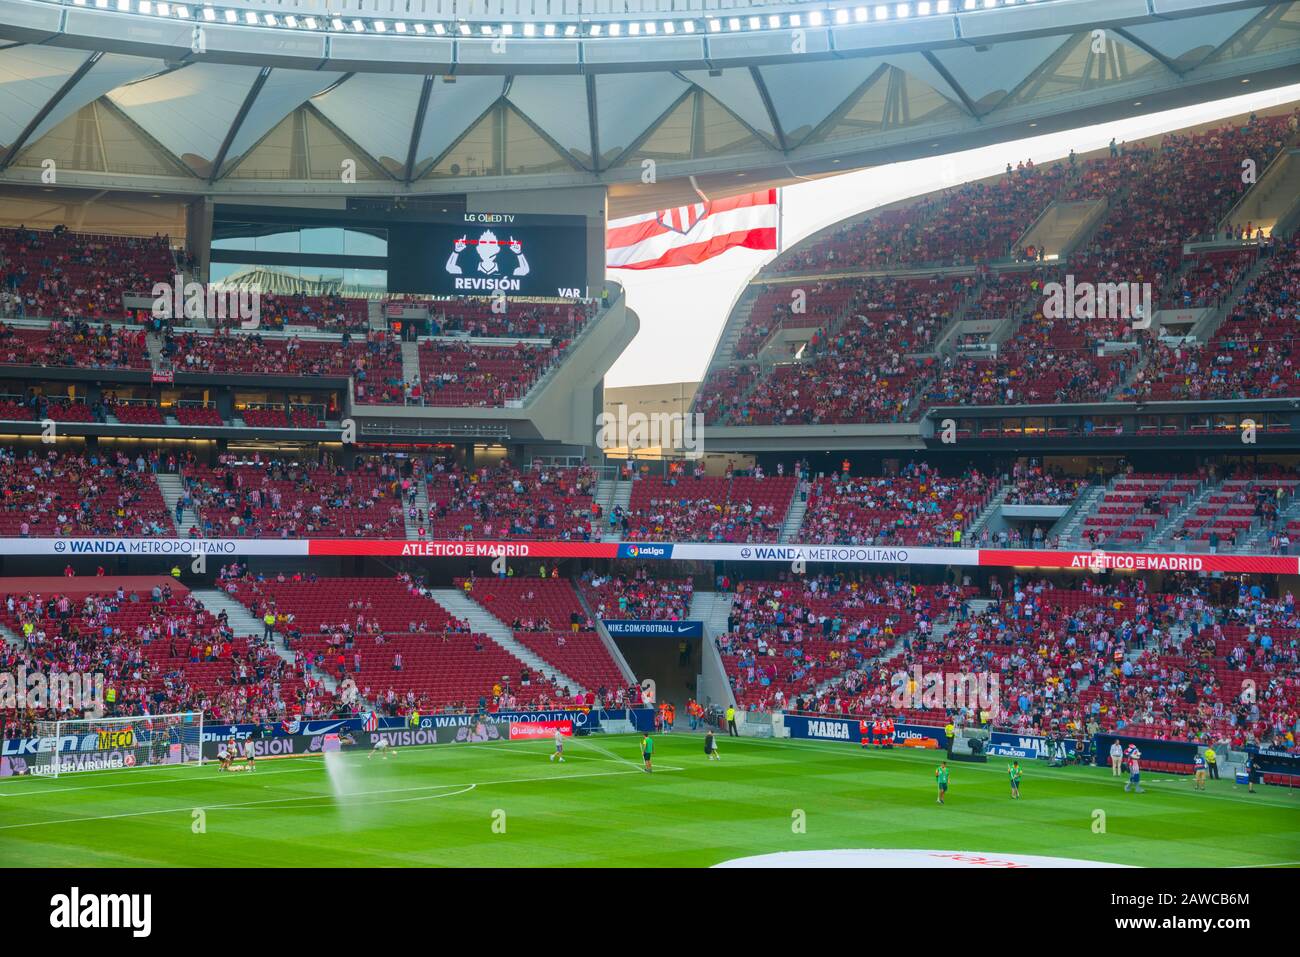 Wanda Metropolitano Stadium During A Football Match Madrid Spain Stock Photo Alamy